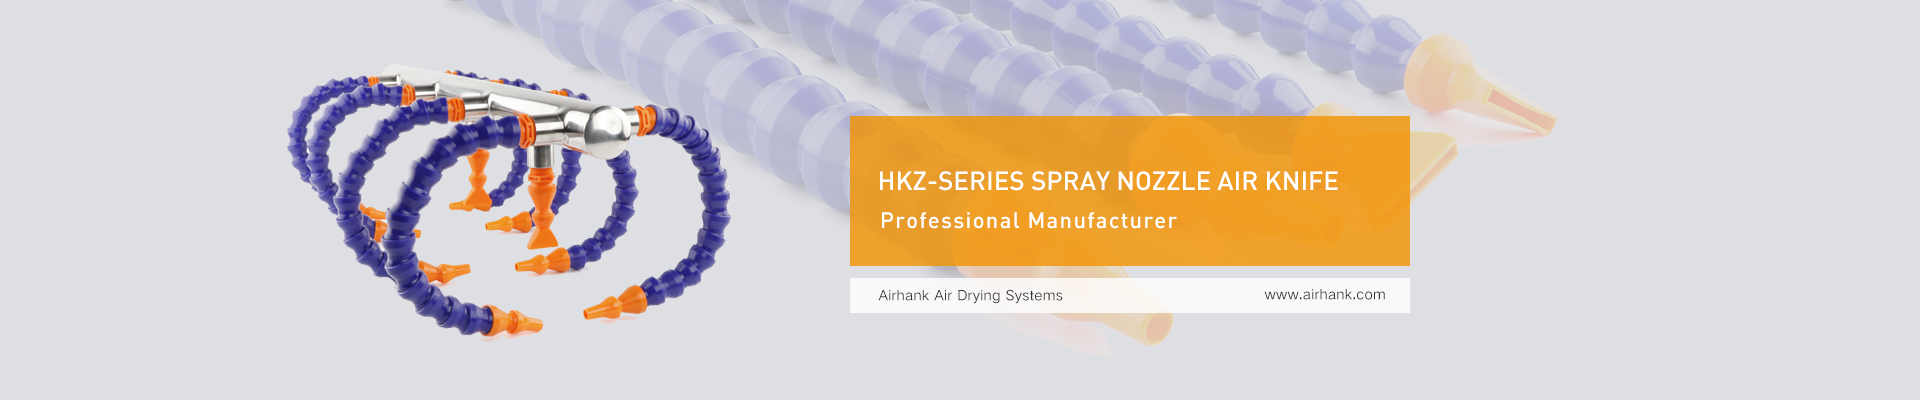 HKZ-series spray nozzle air knife